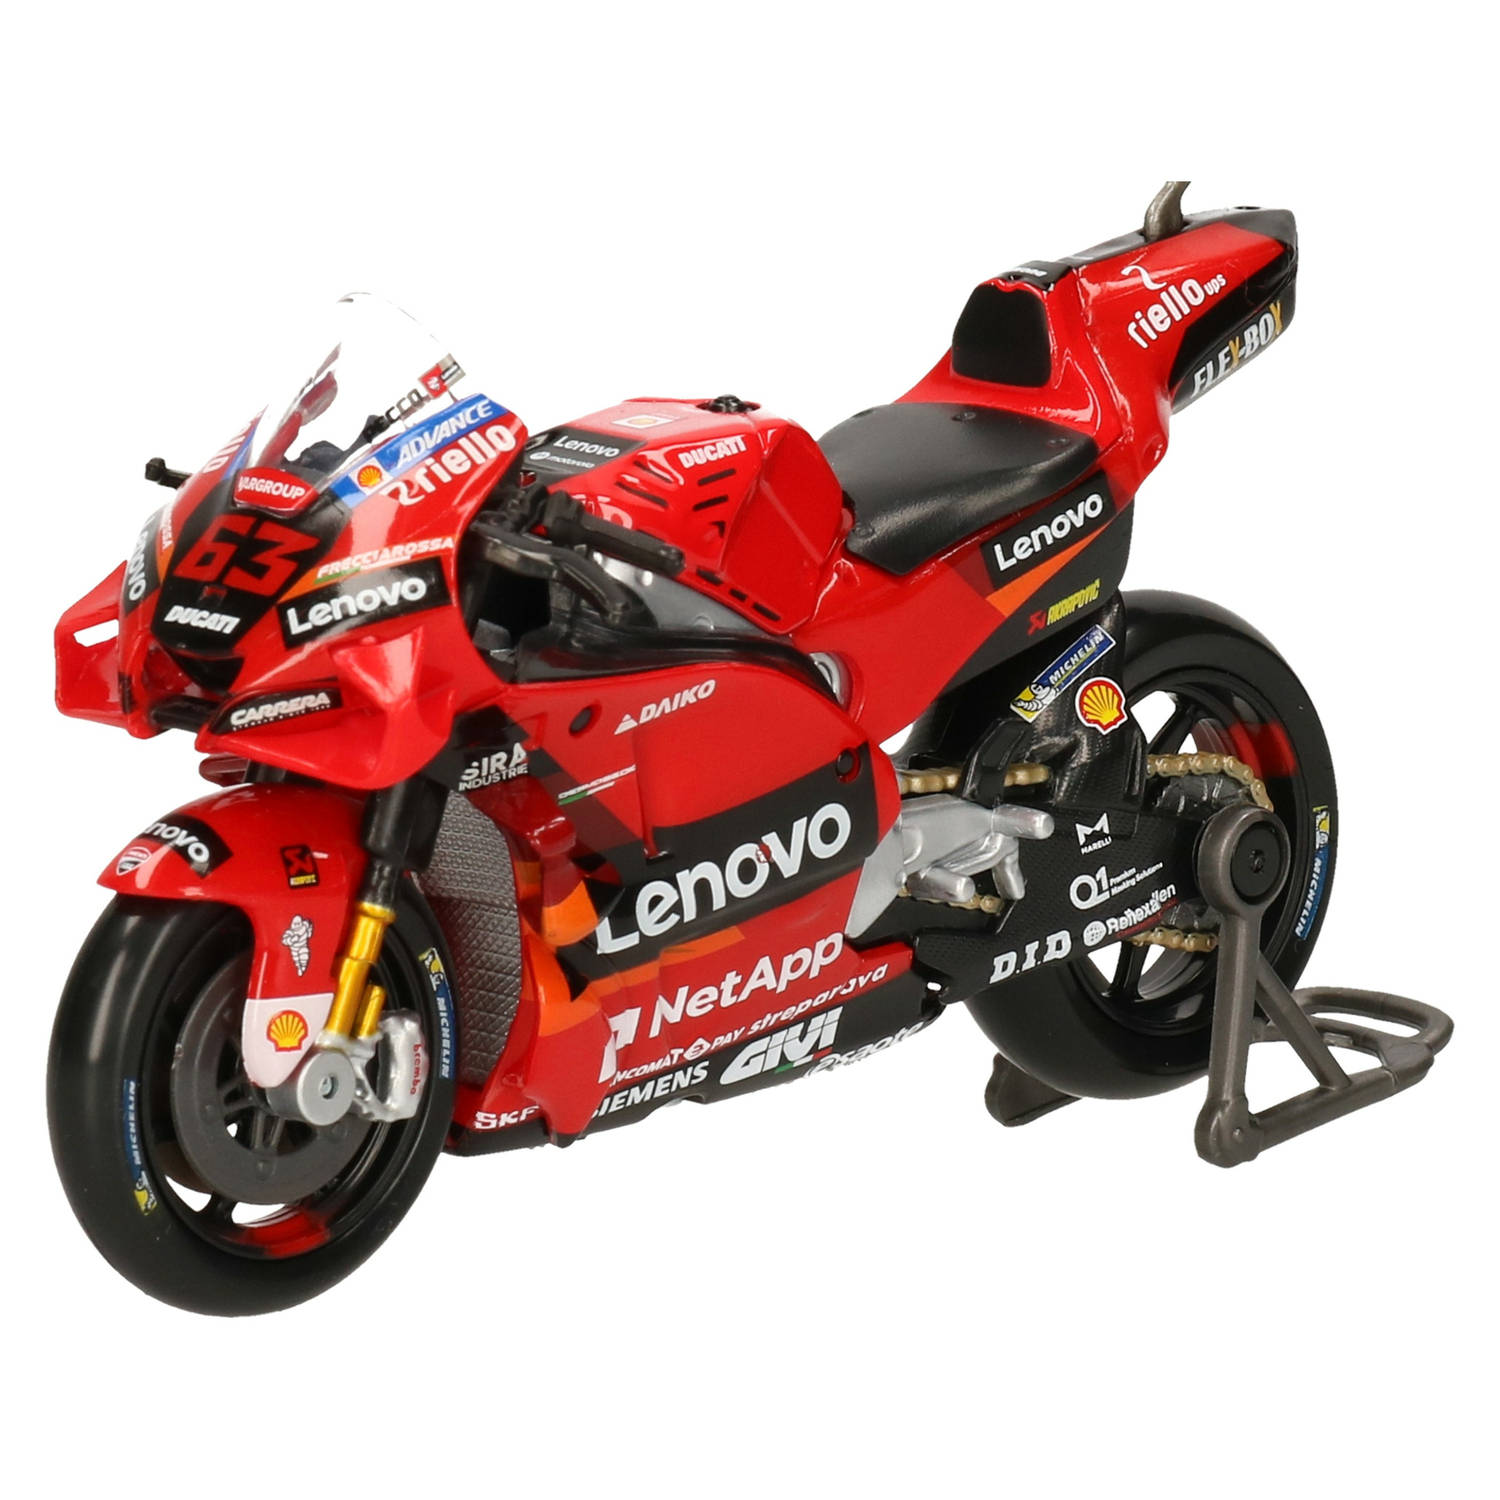 Maisto model motor/speelgoed Ducati Desmosedici Francesco Bagnaia MotoGP - rood - schaal 1:18/12 x 5 x 8 cm